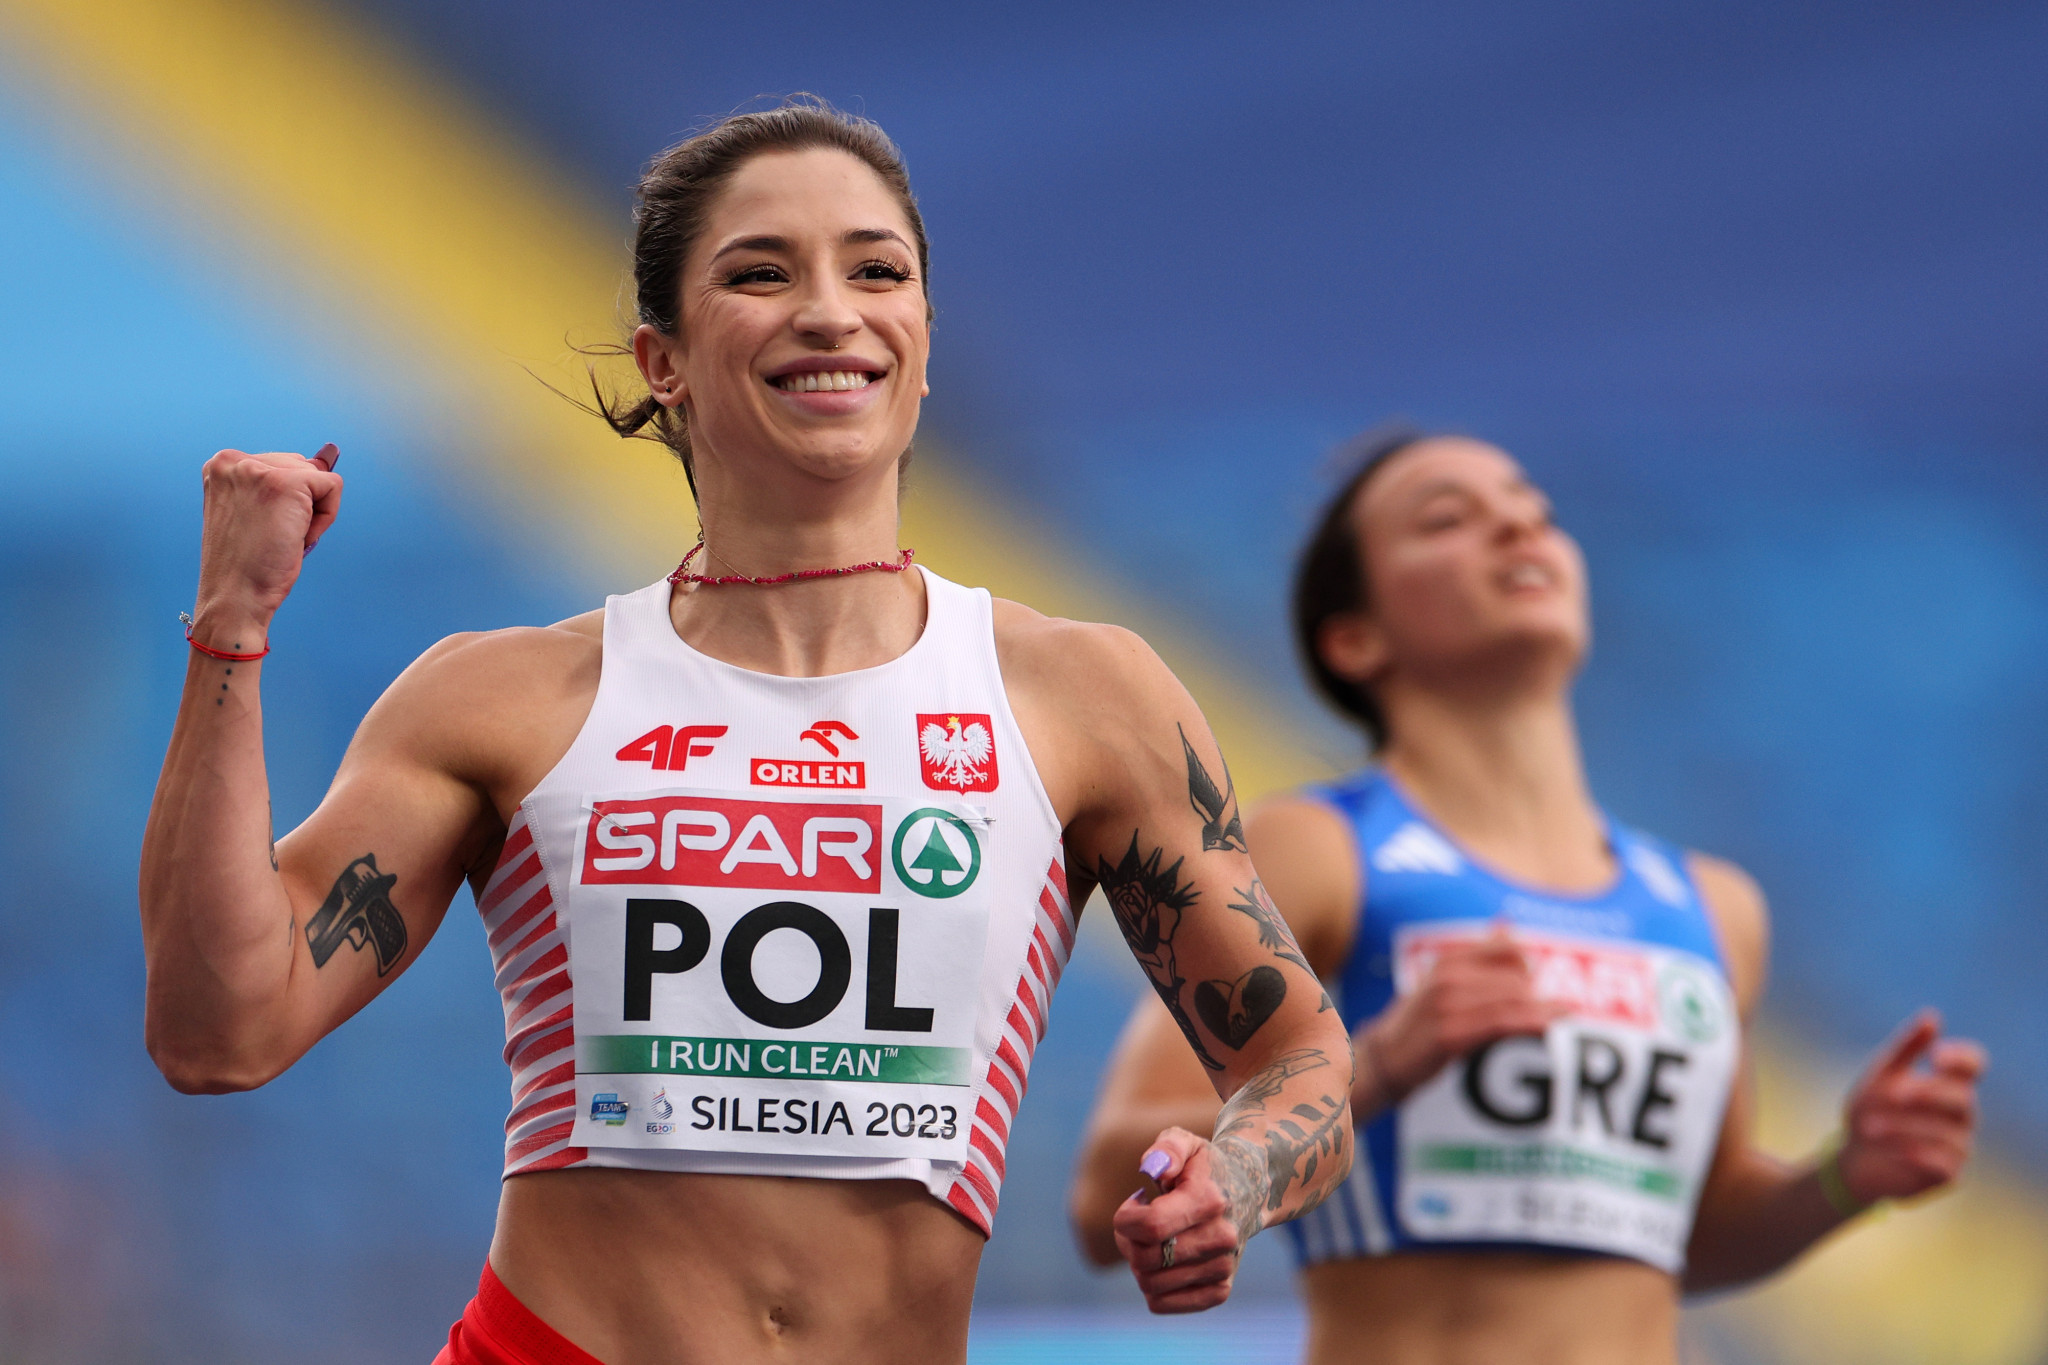 Poland's Ewa Swoboda won the women's 100m race on home soil ©Getty Images